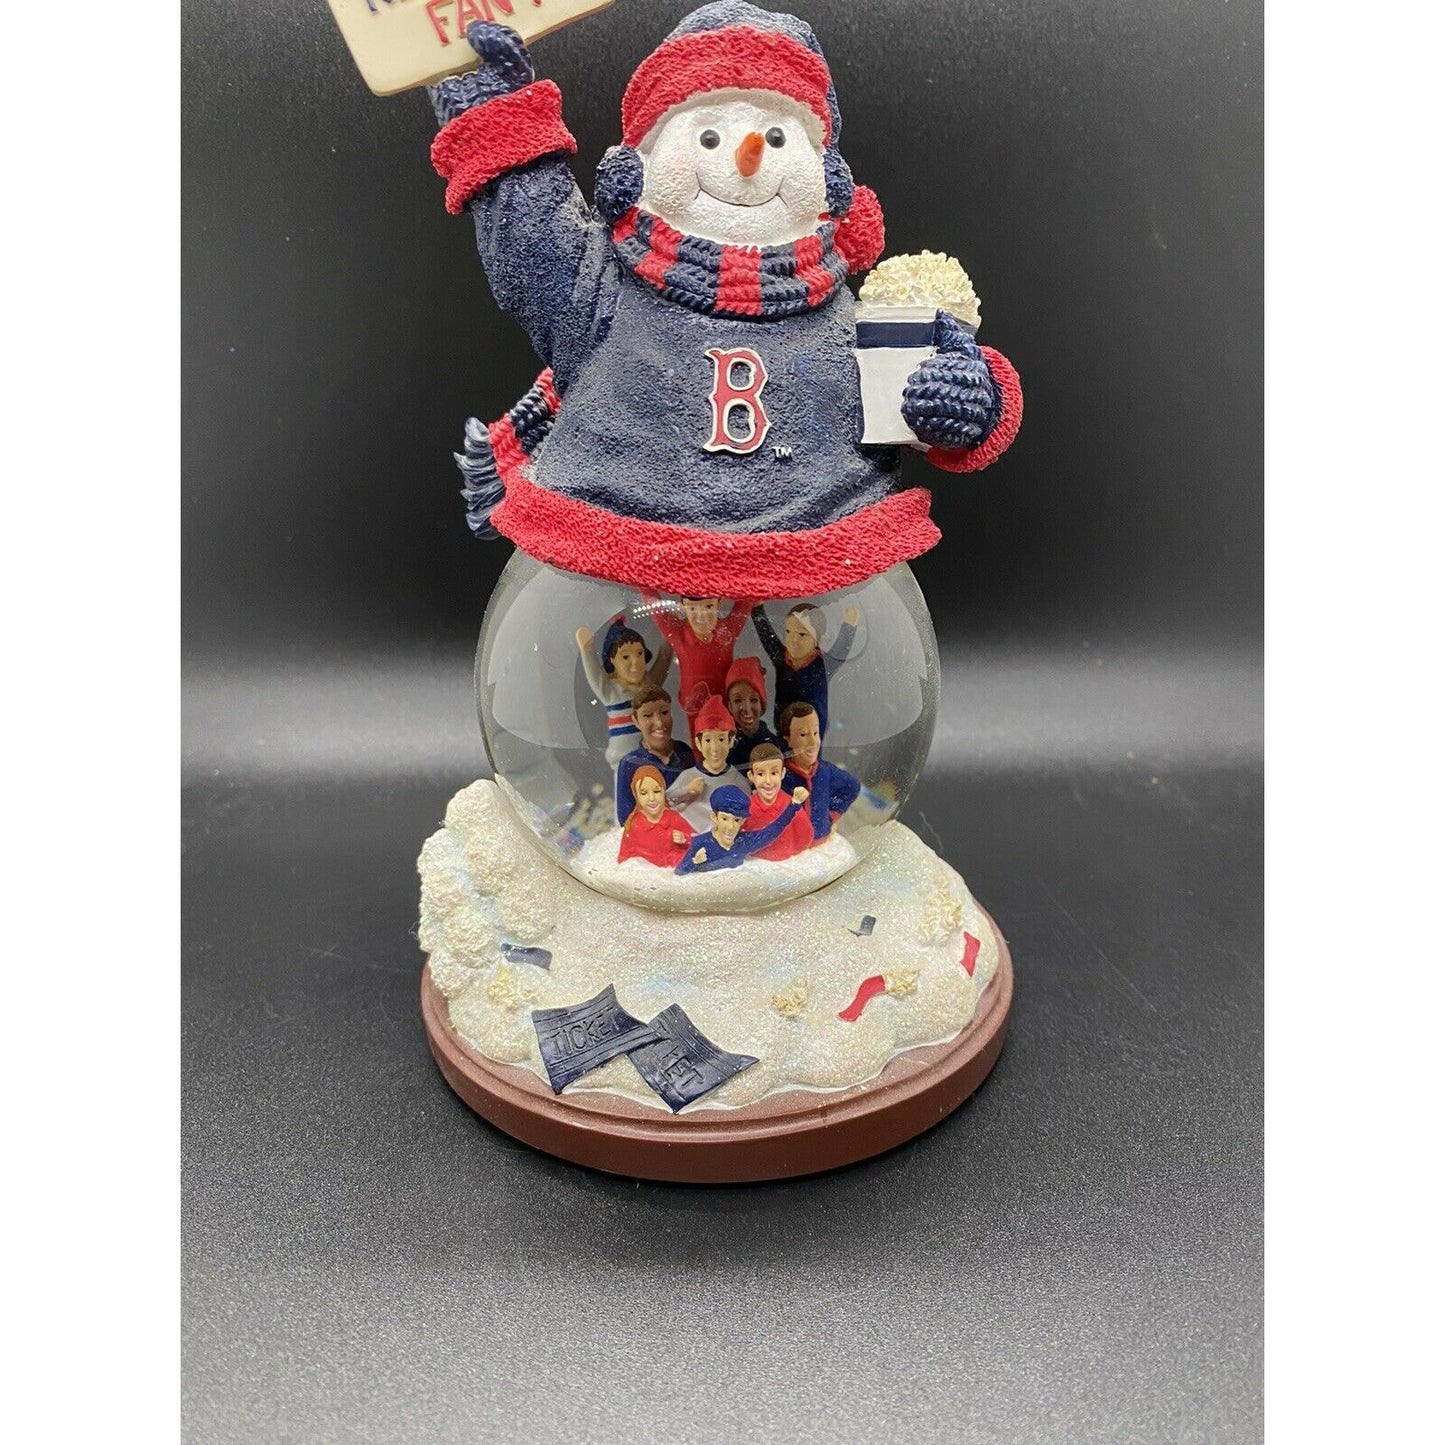 2005 Boston Red Sox Limited Edition “Stadium Snowman” Snow globe 469/3000